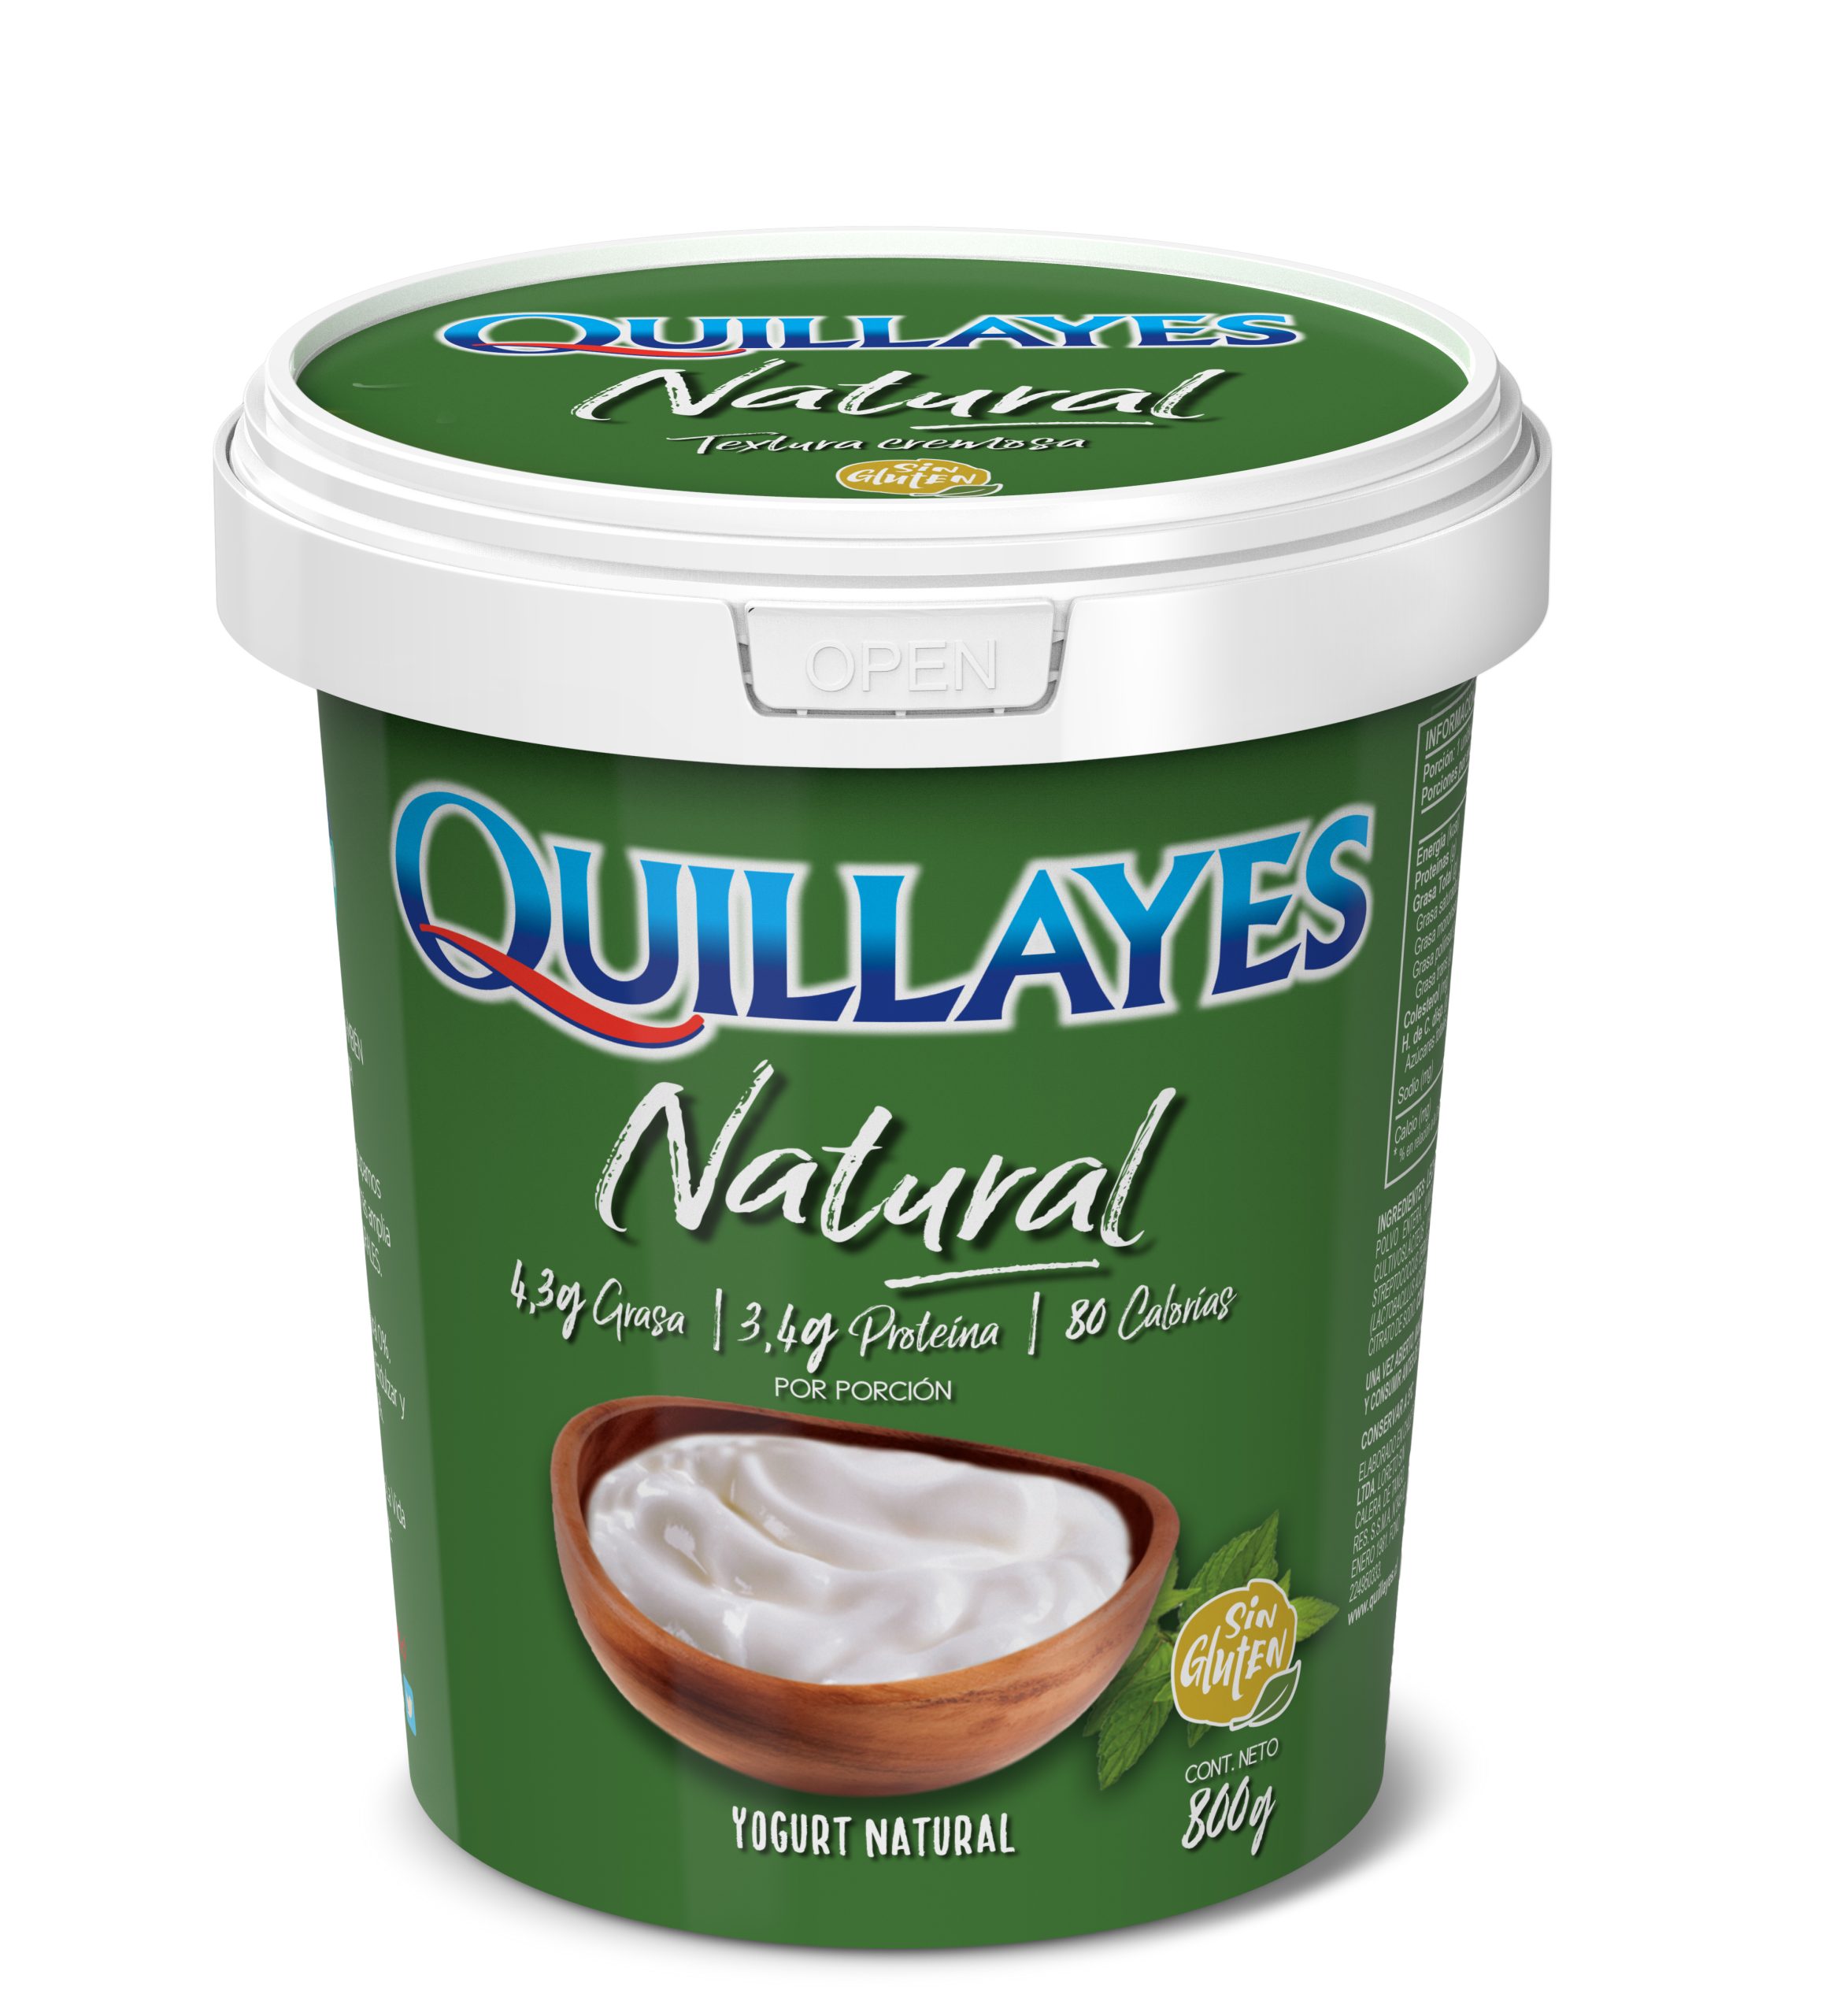 YOGURT NATURAL 800 g - Quillayes - Surlat